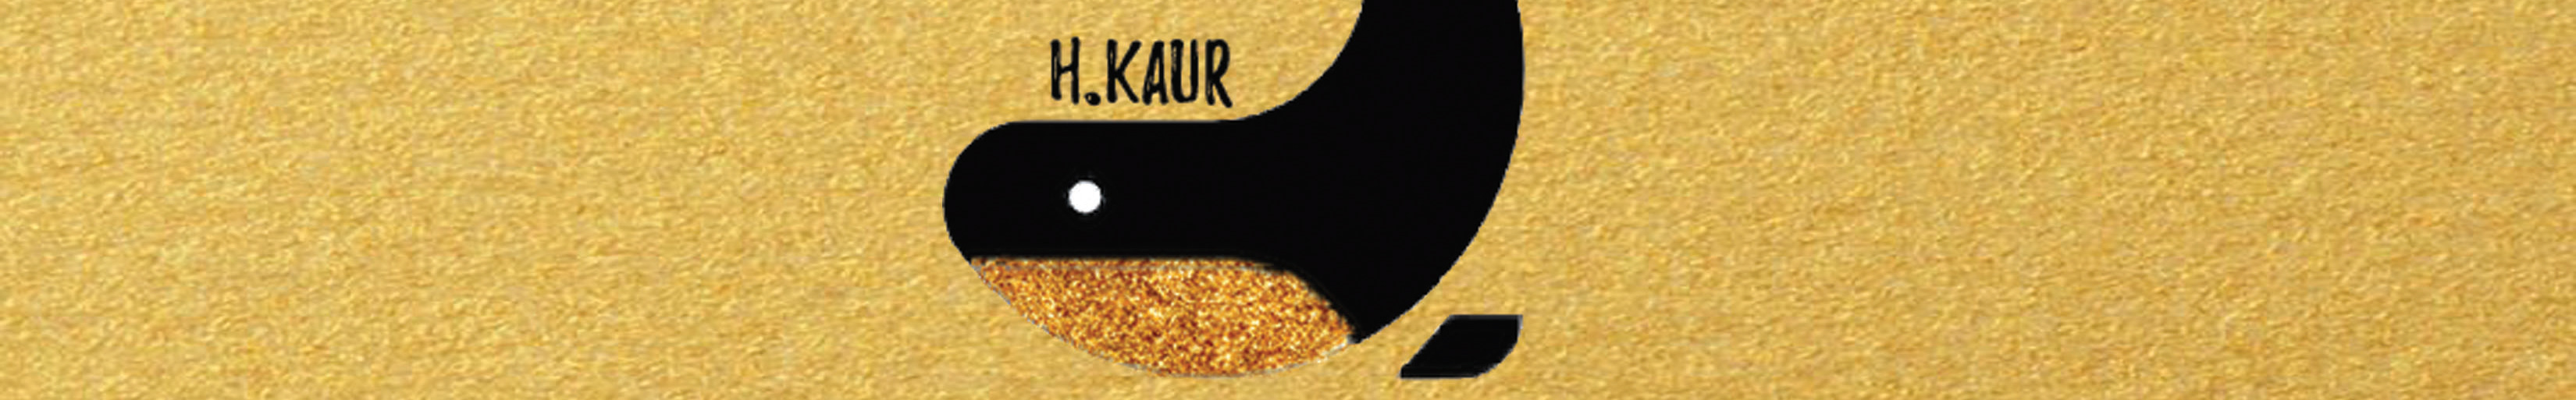 Harmanpreet Kaur's profile banner